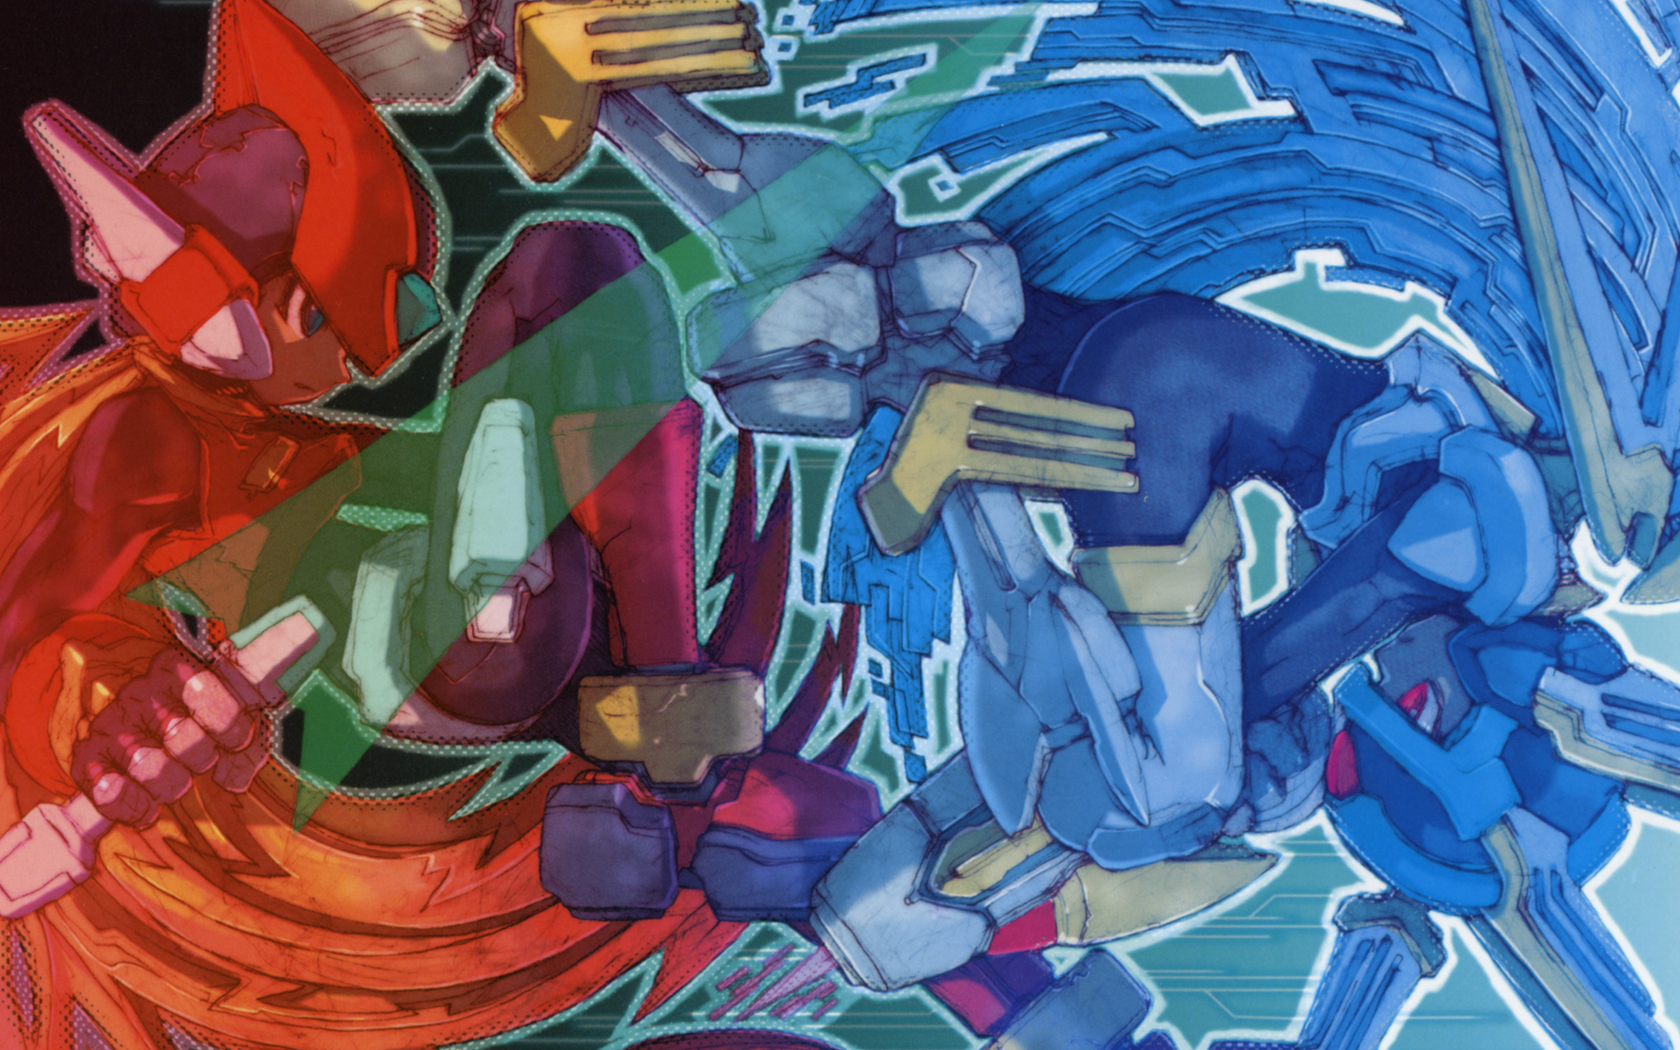 Megaman Zero Backgrounds